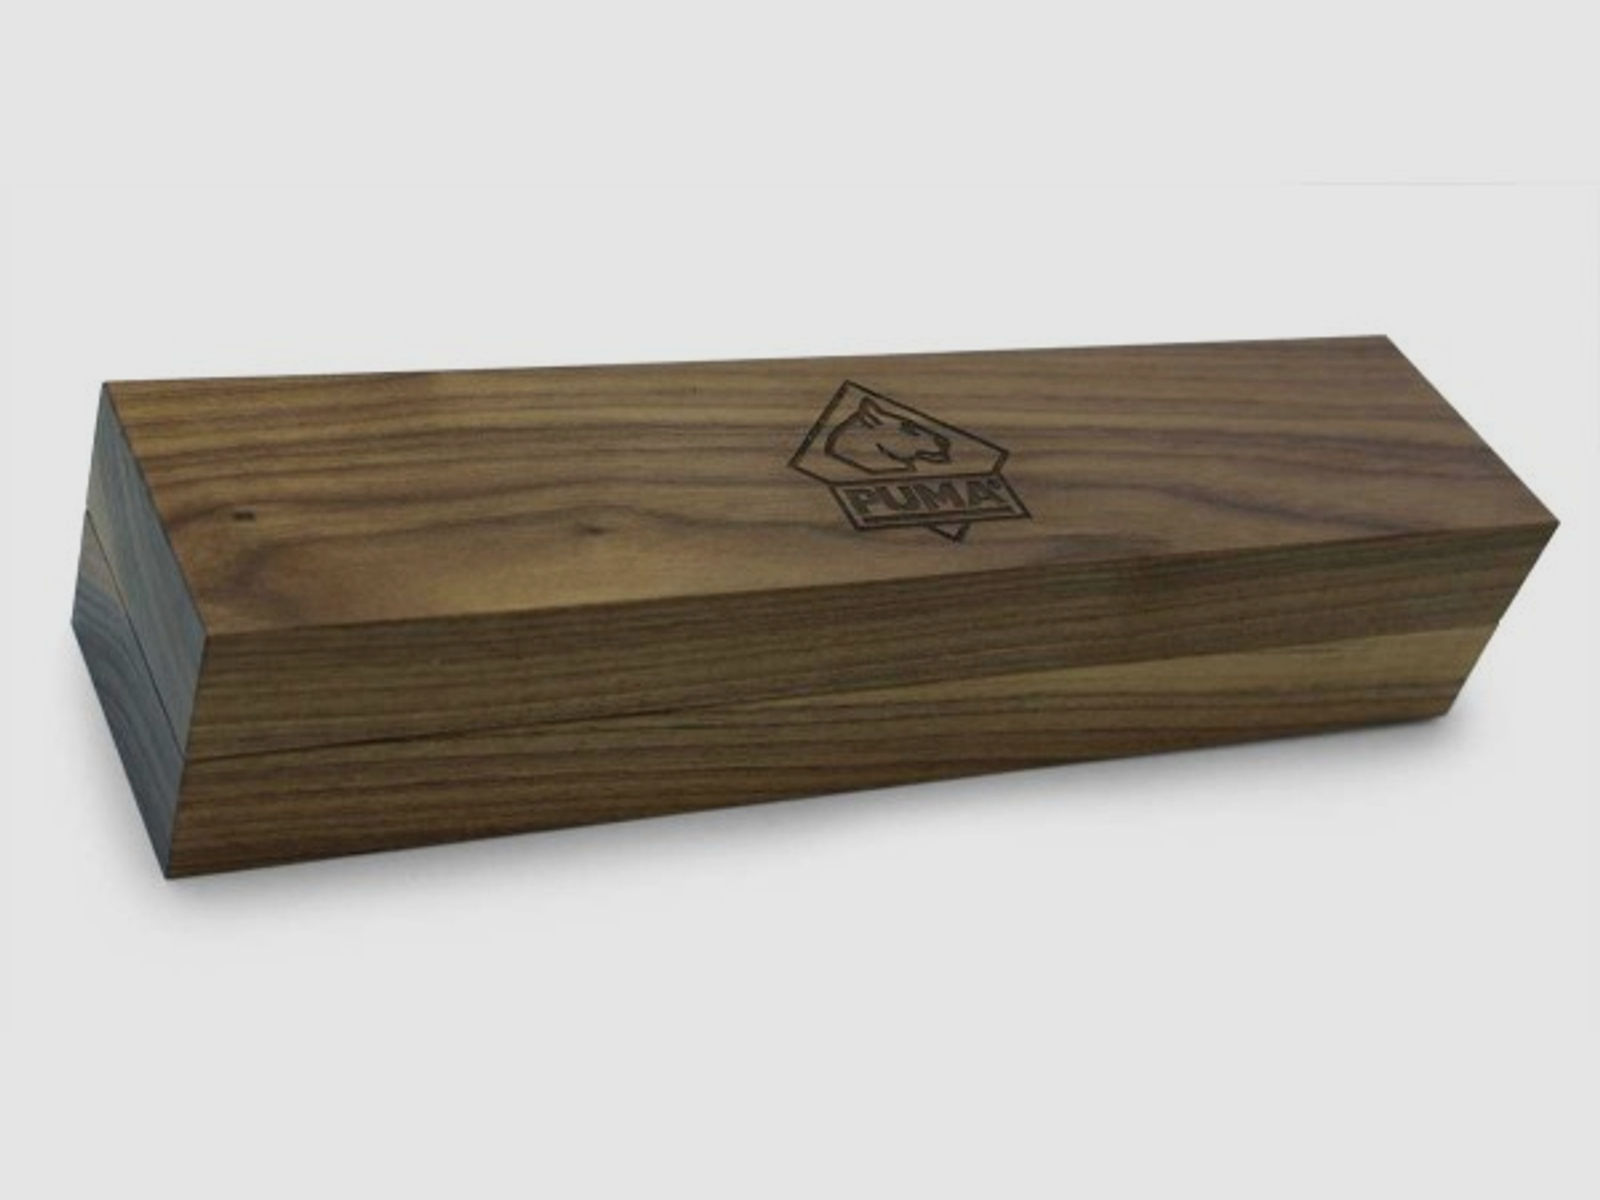 PUMA Holz-Geschenbox mit Magnetverschluss, white hunter